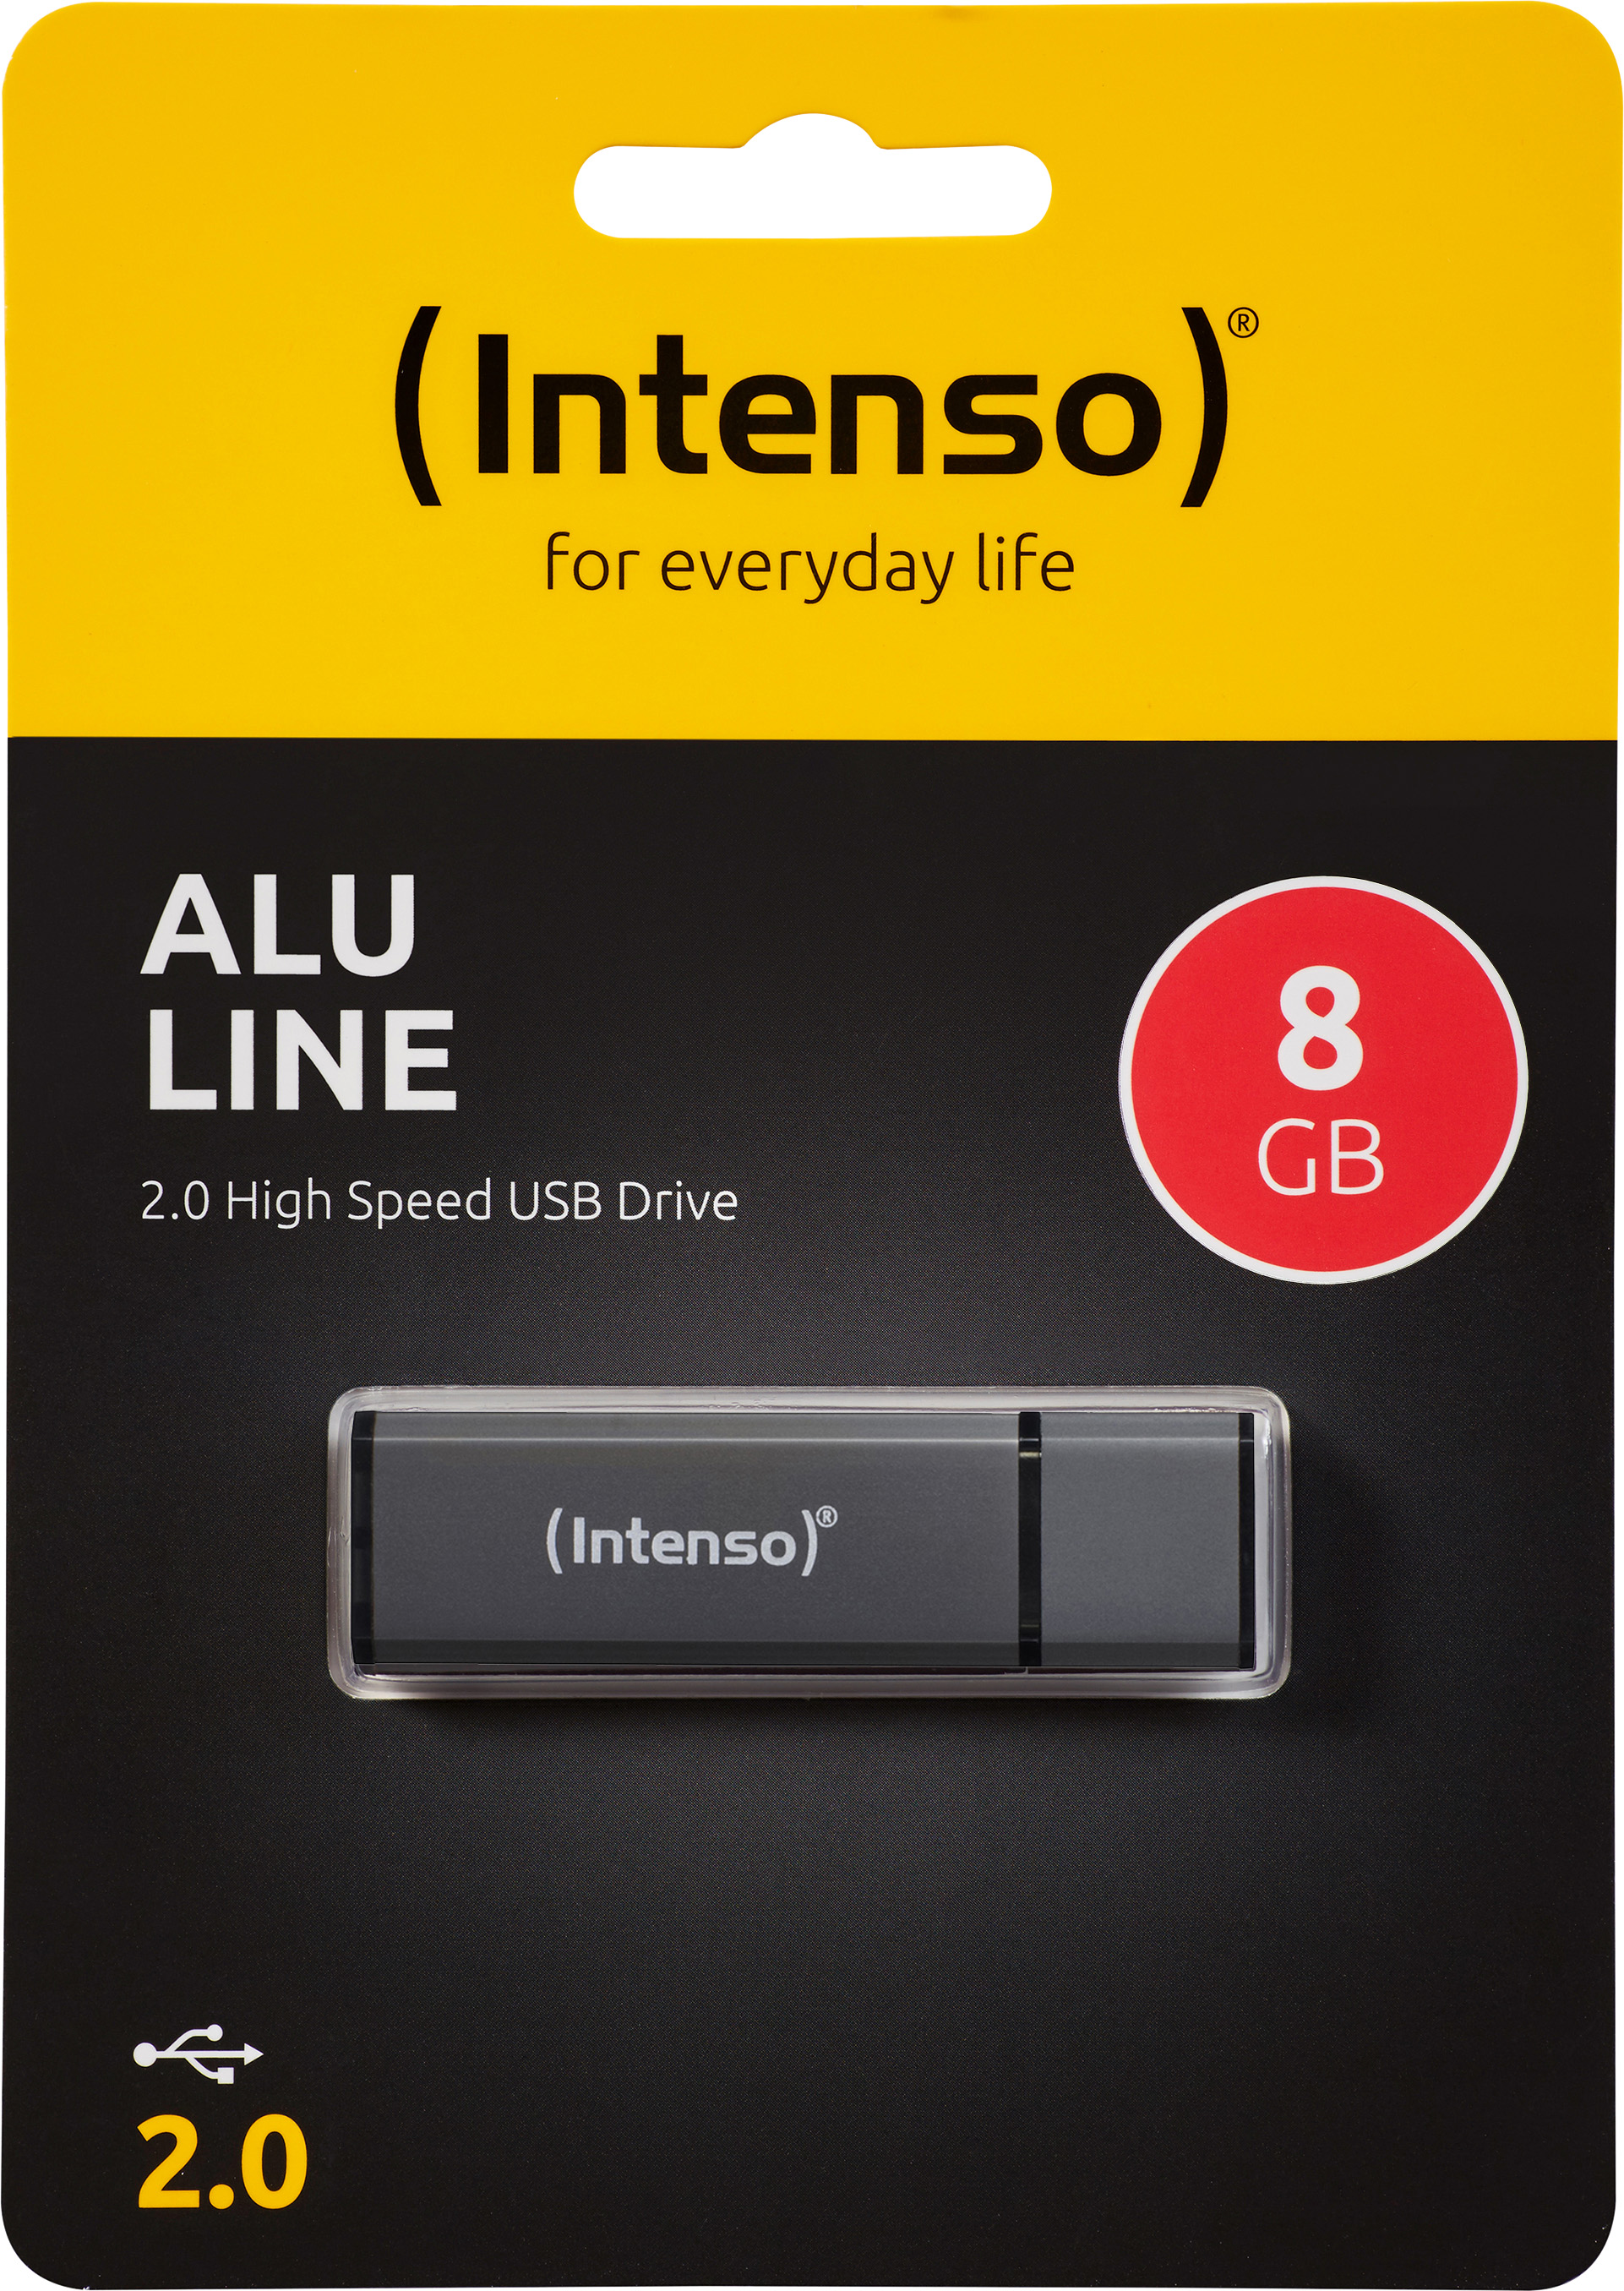 Intenso USB 2.0 Stick 8GB, Alu Line, anthrazit (R) 28MB/s, (W) 6.5MB/s, Retail-Blister